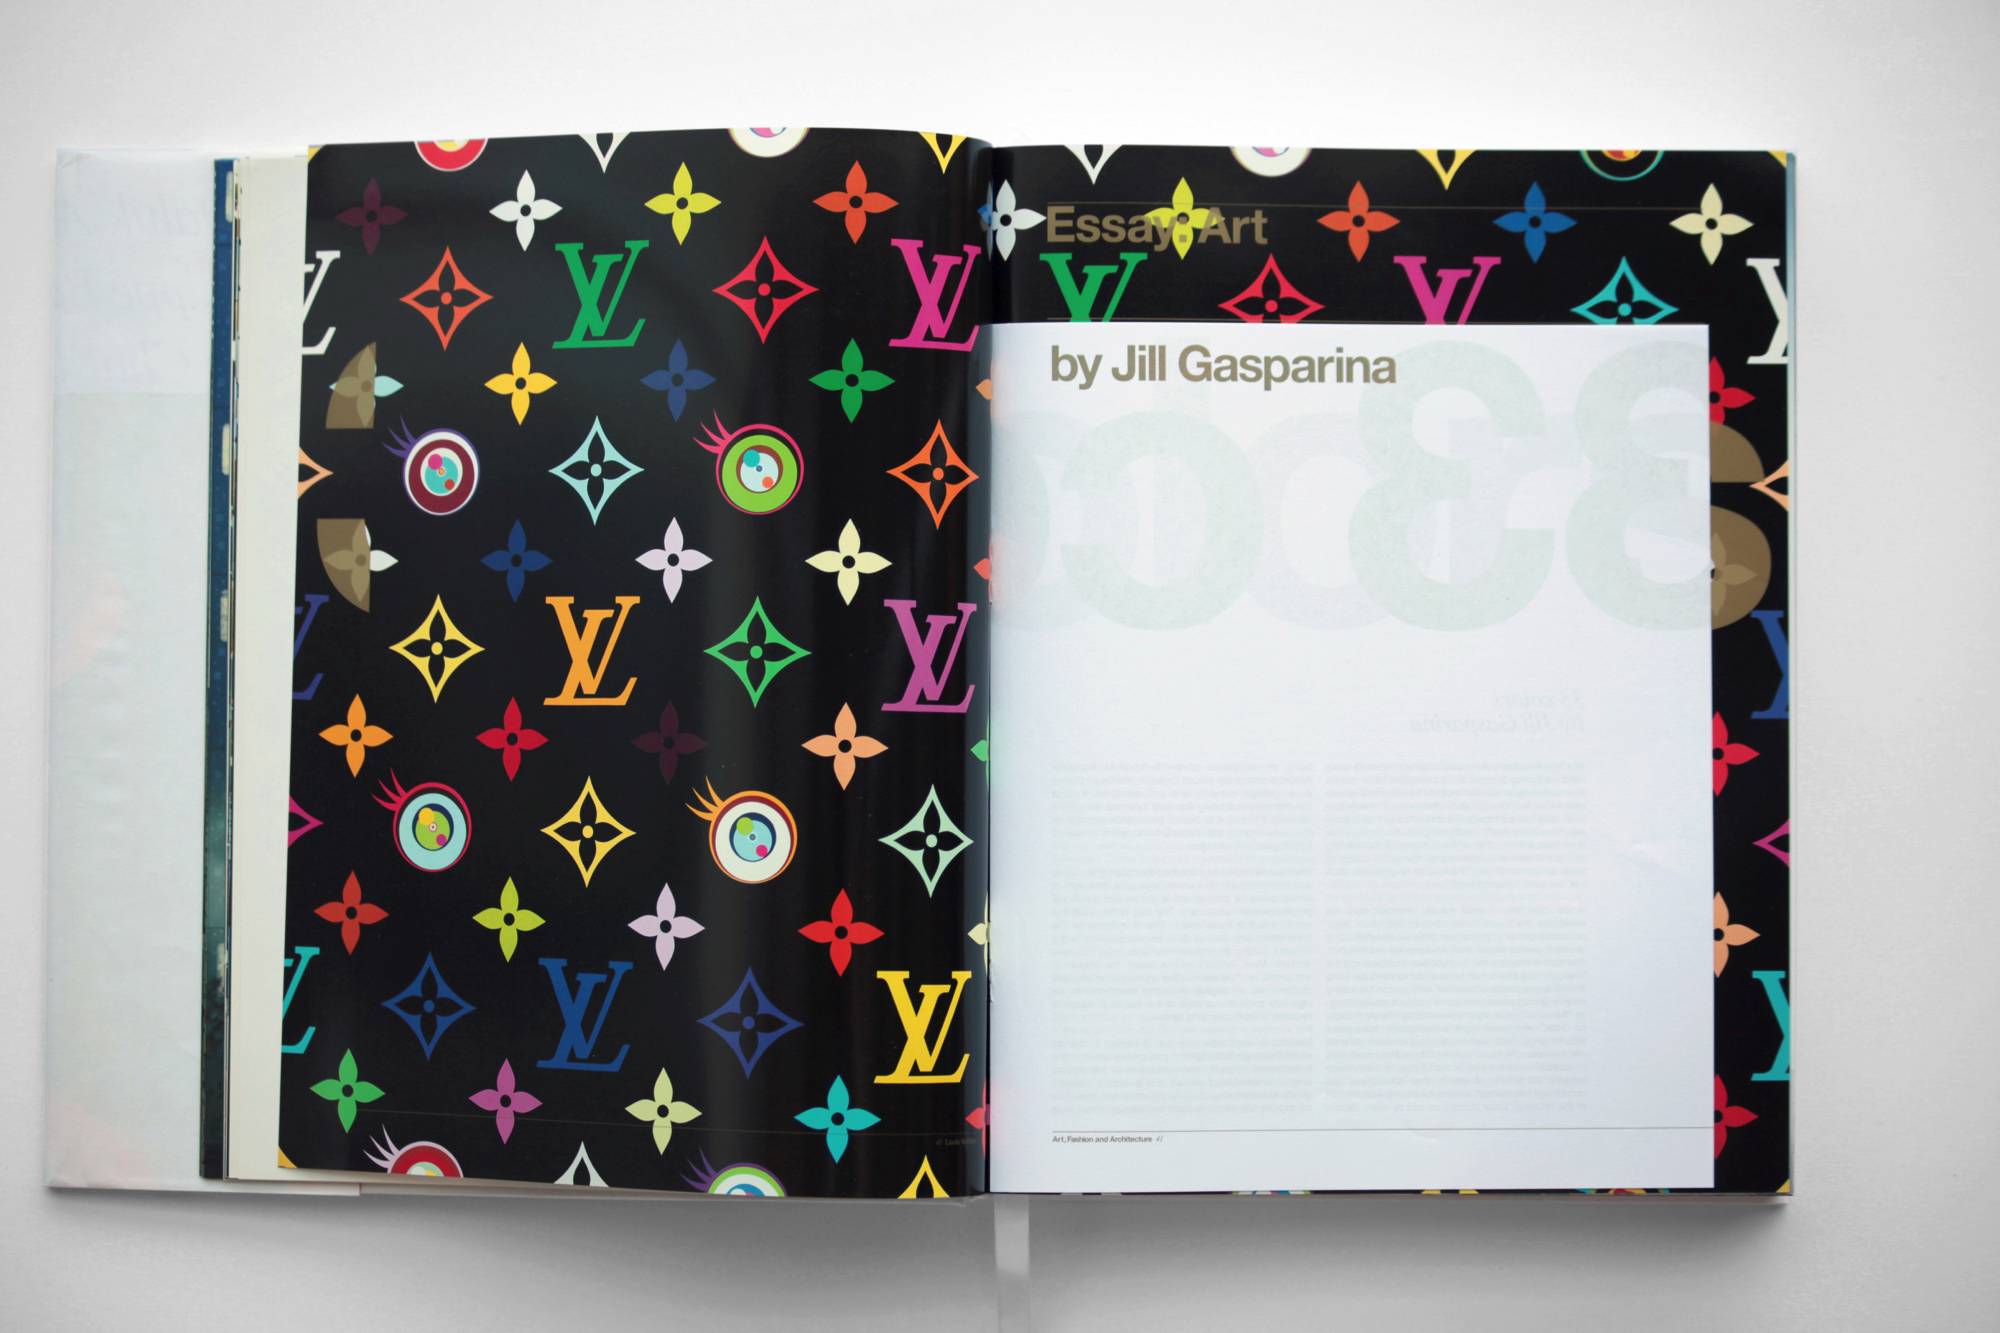 Louis Vuitton: Art, Fashion and Architecture Book